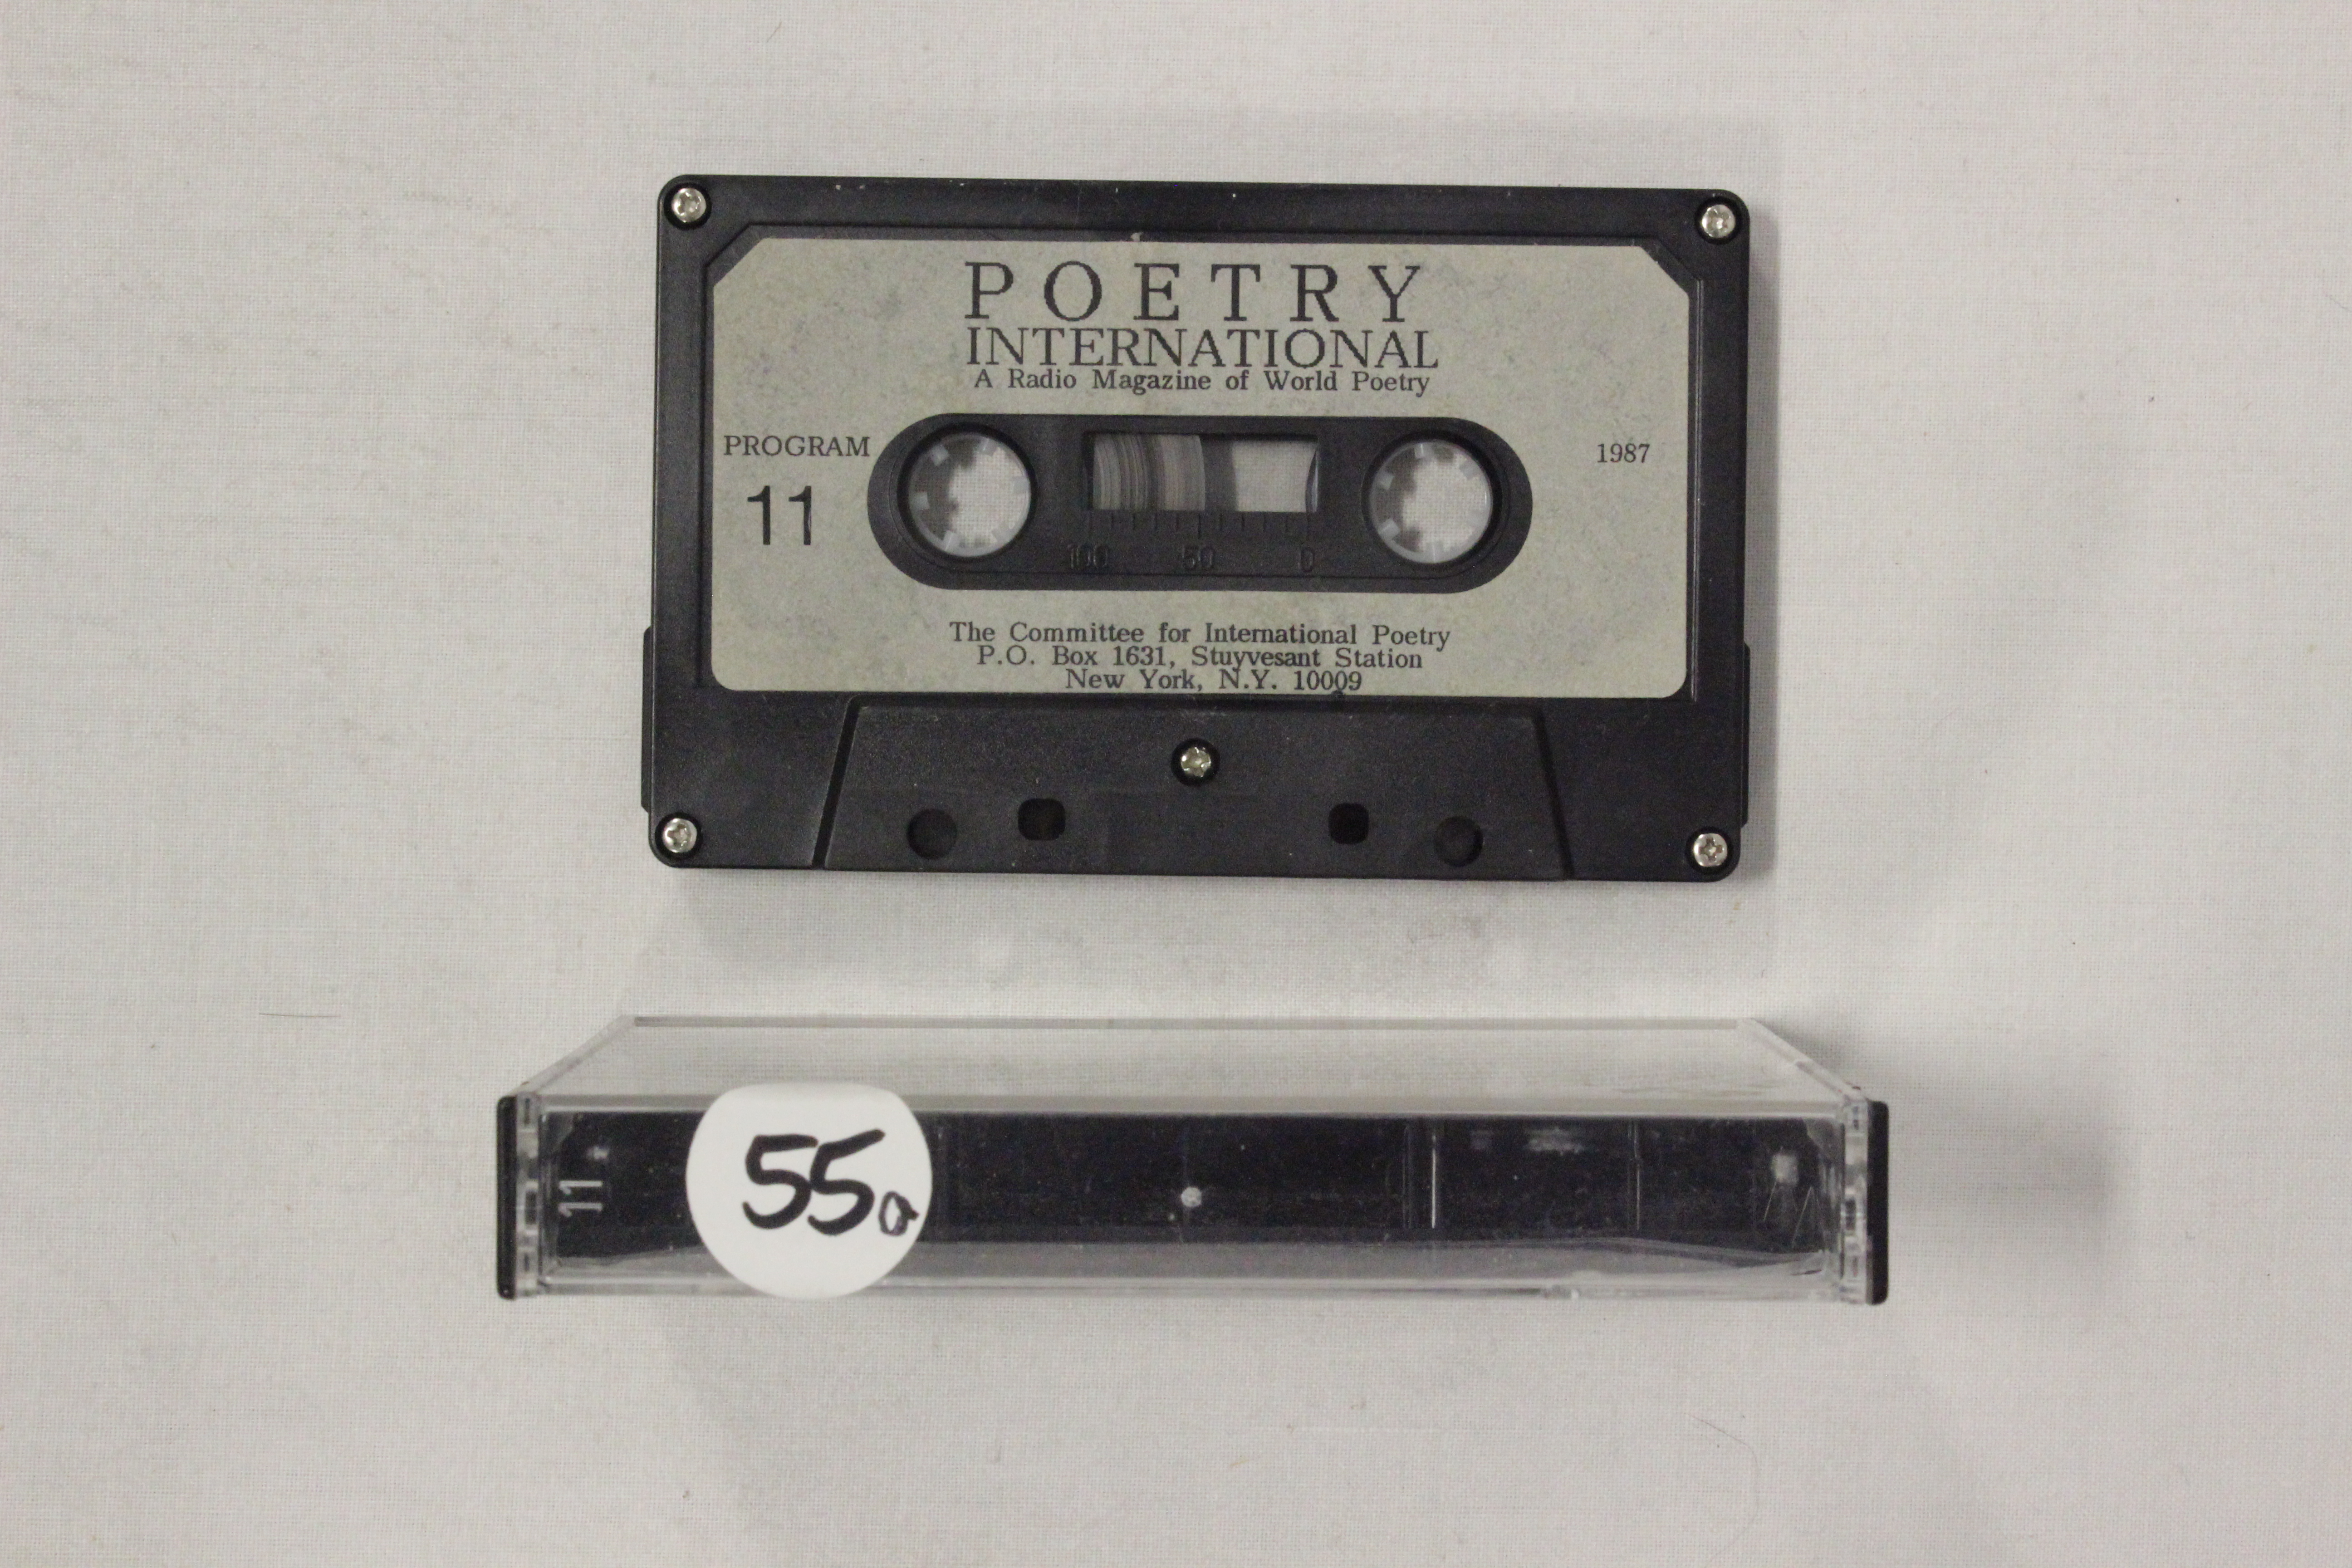  Verse on Poetry International: A Radio Magazine of World Poetry, program 11